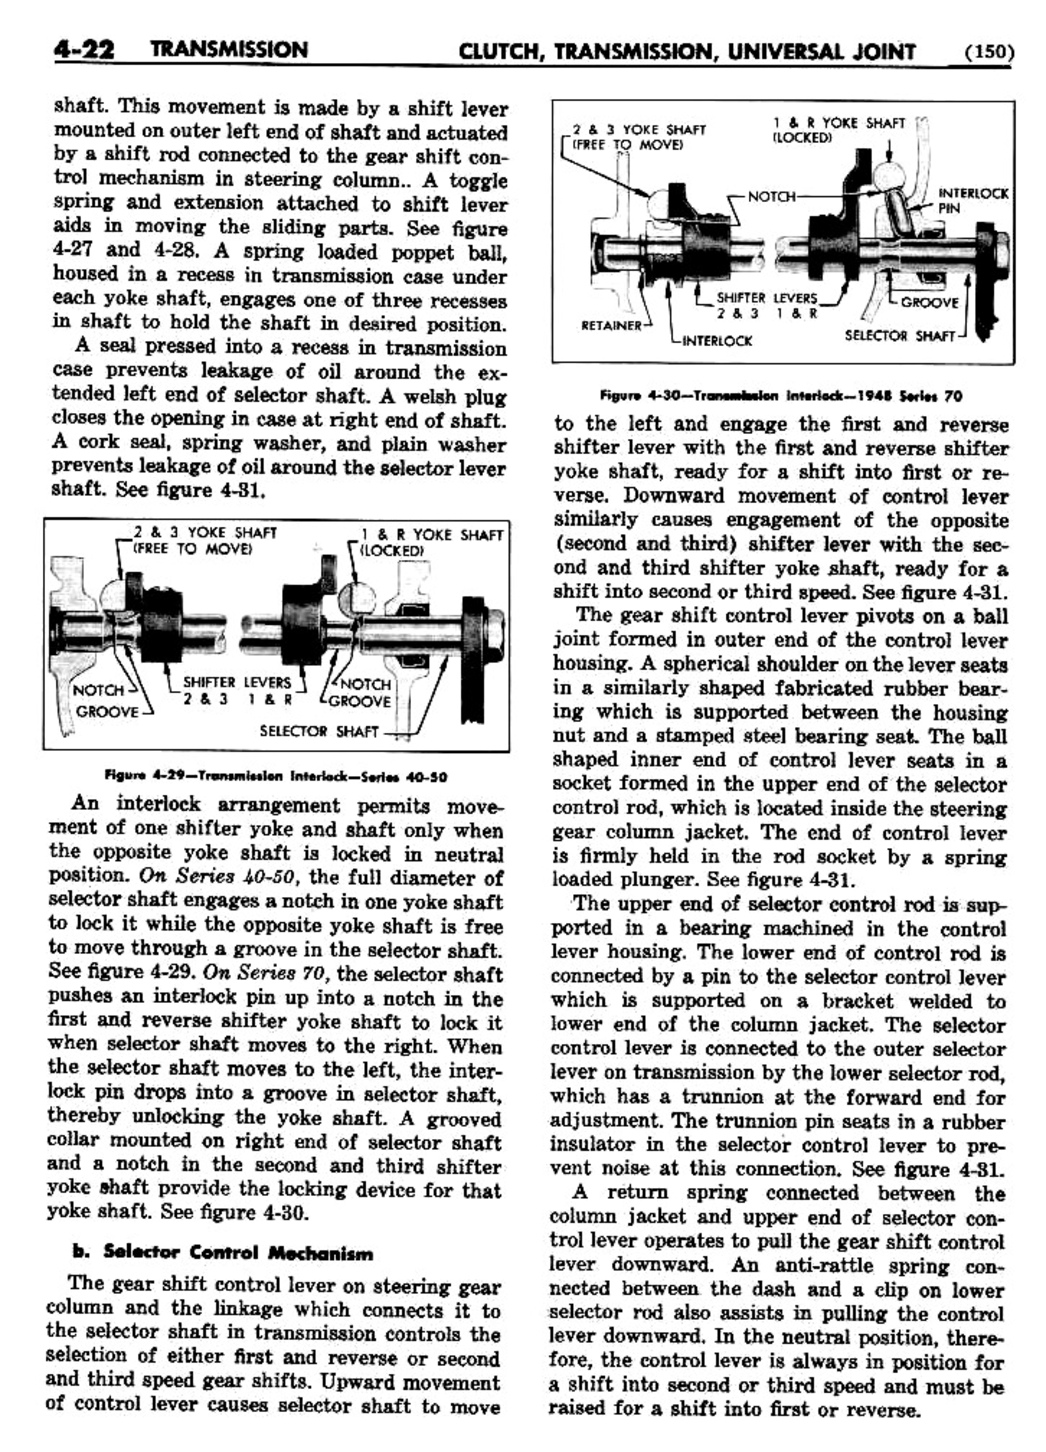 n_05 1948 Buick Shop Manual - Transmission-022-022.jpg